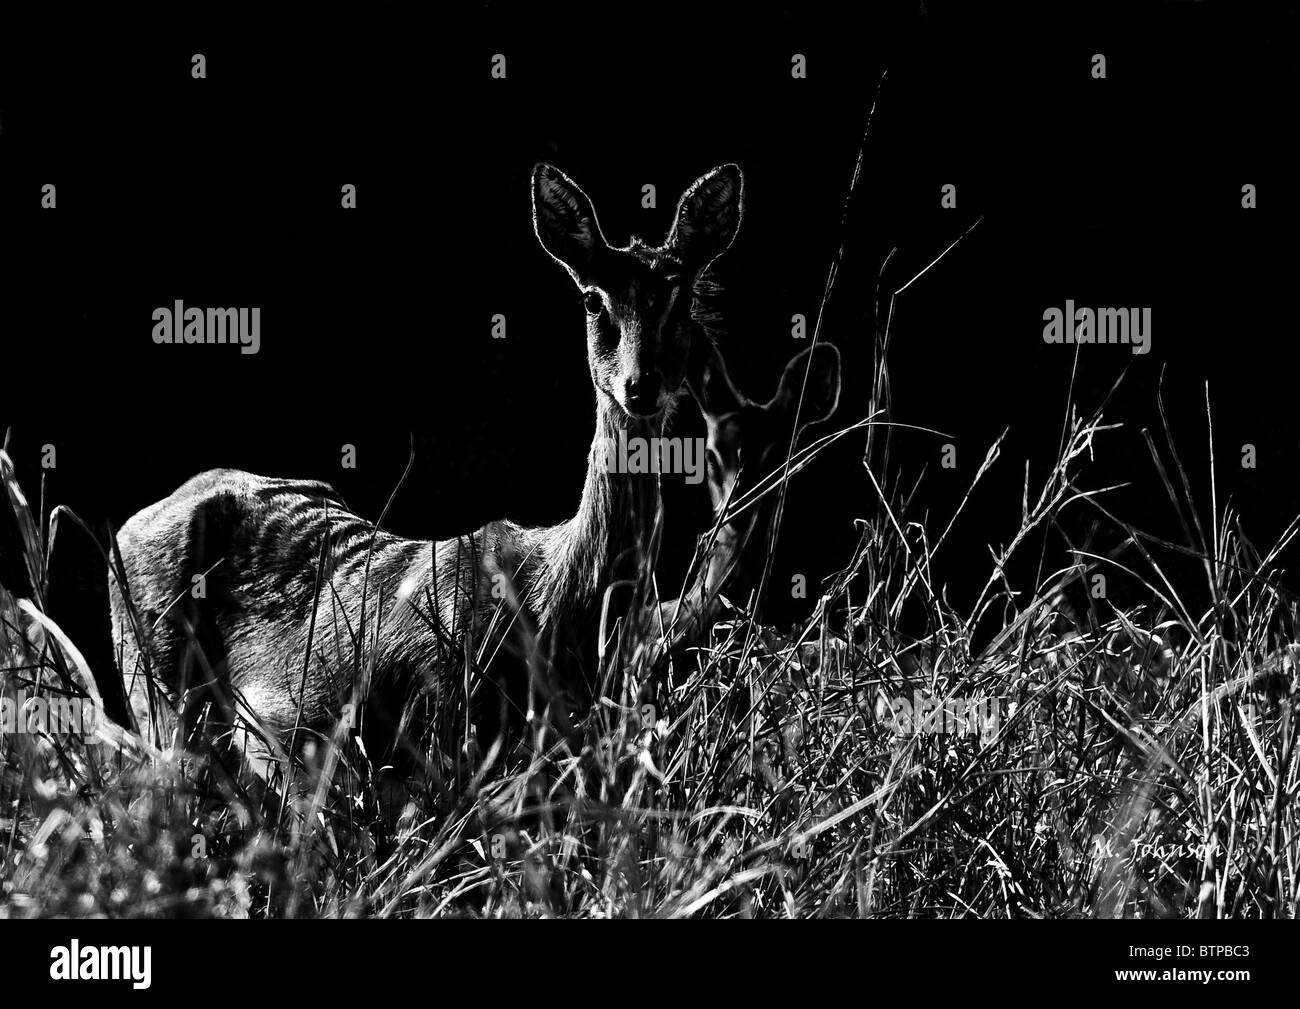 Oribi antelope standing in grass black and white silhouette landscape Stock Photo